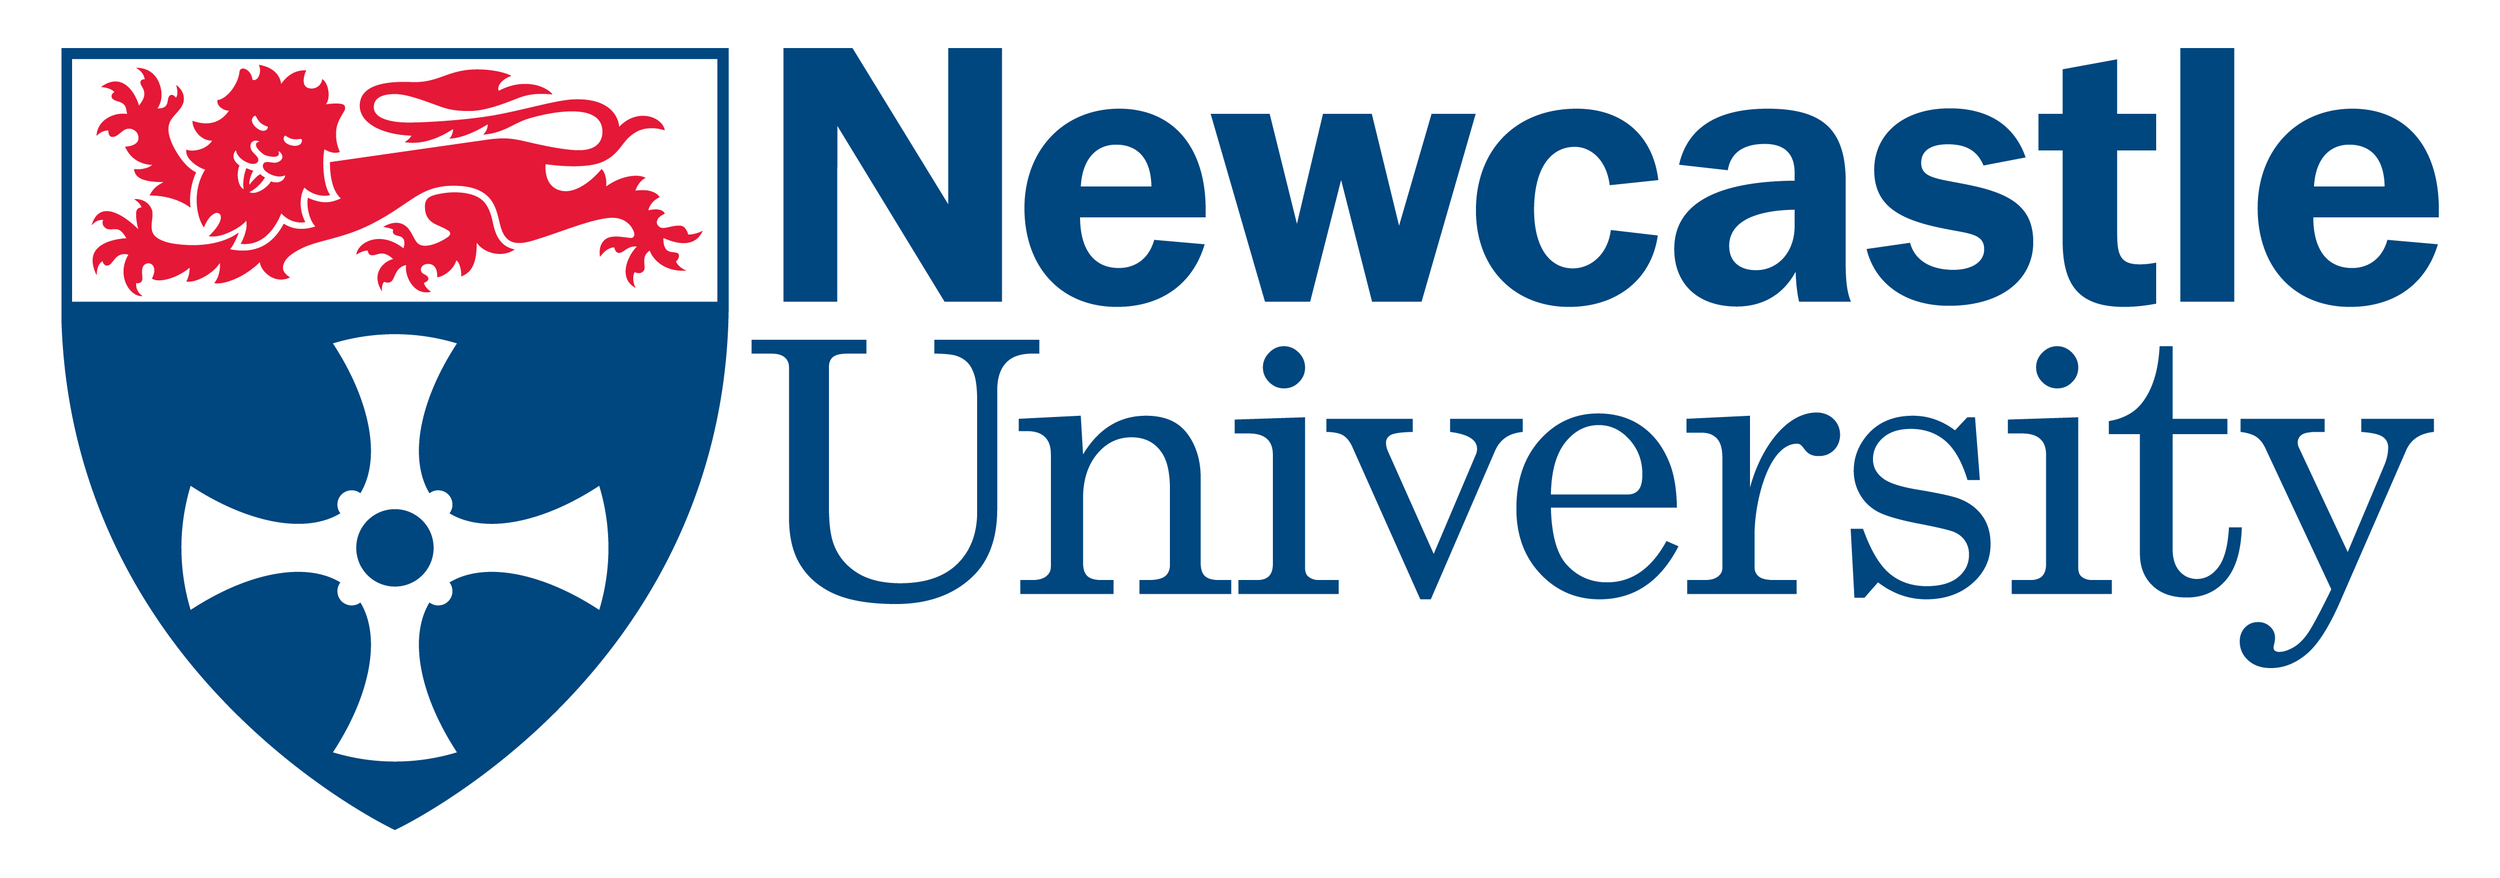 Newcastle University logo.jpg